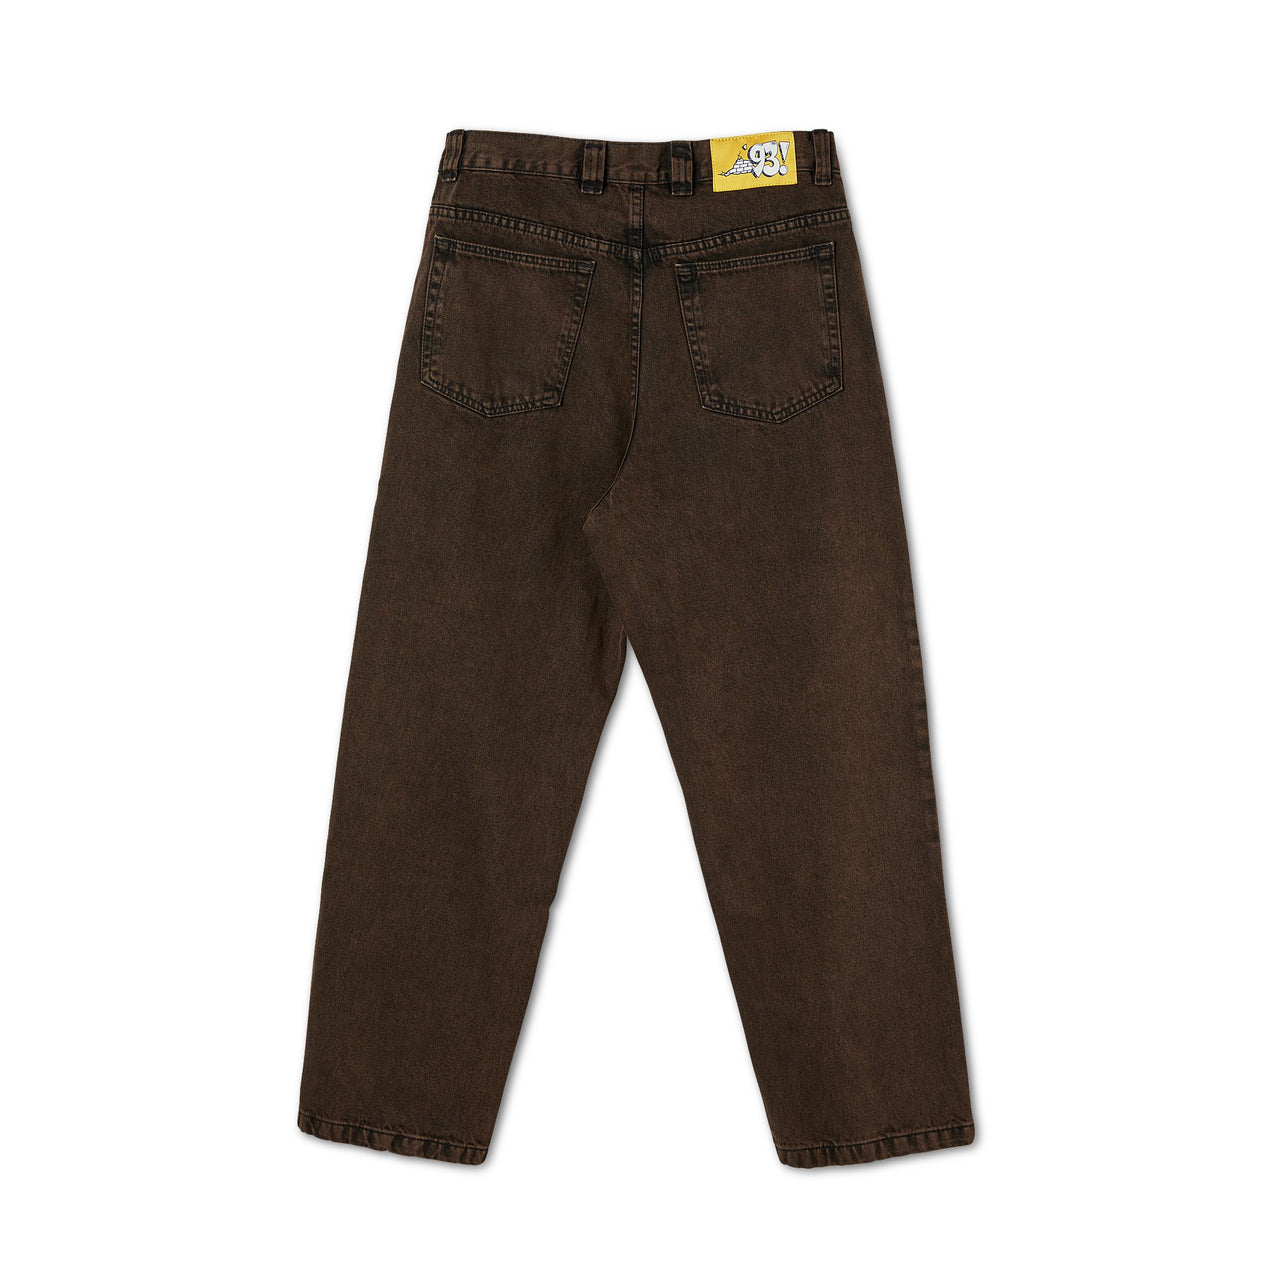 Polar '93! Denim Jeans - Brown/Black